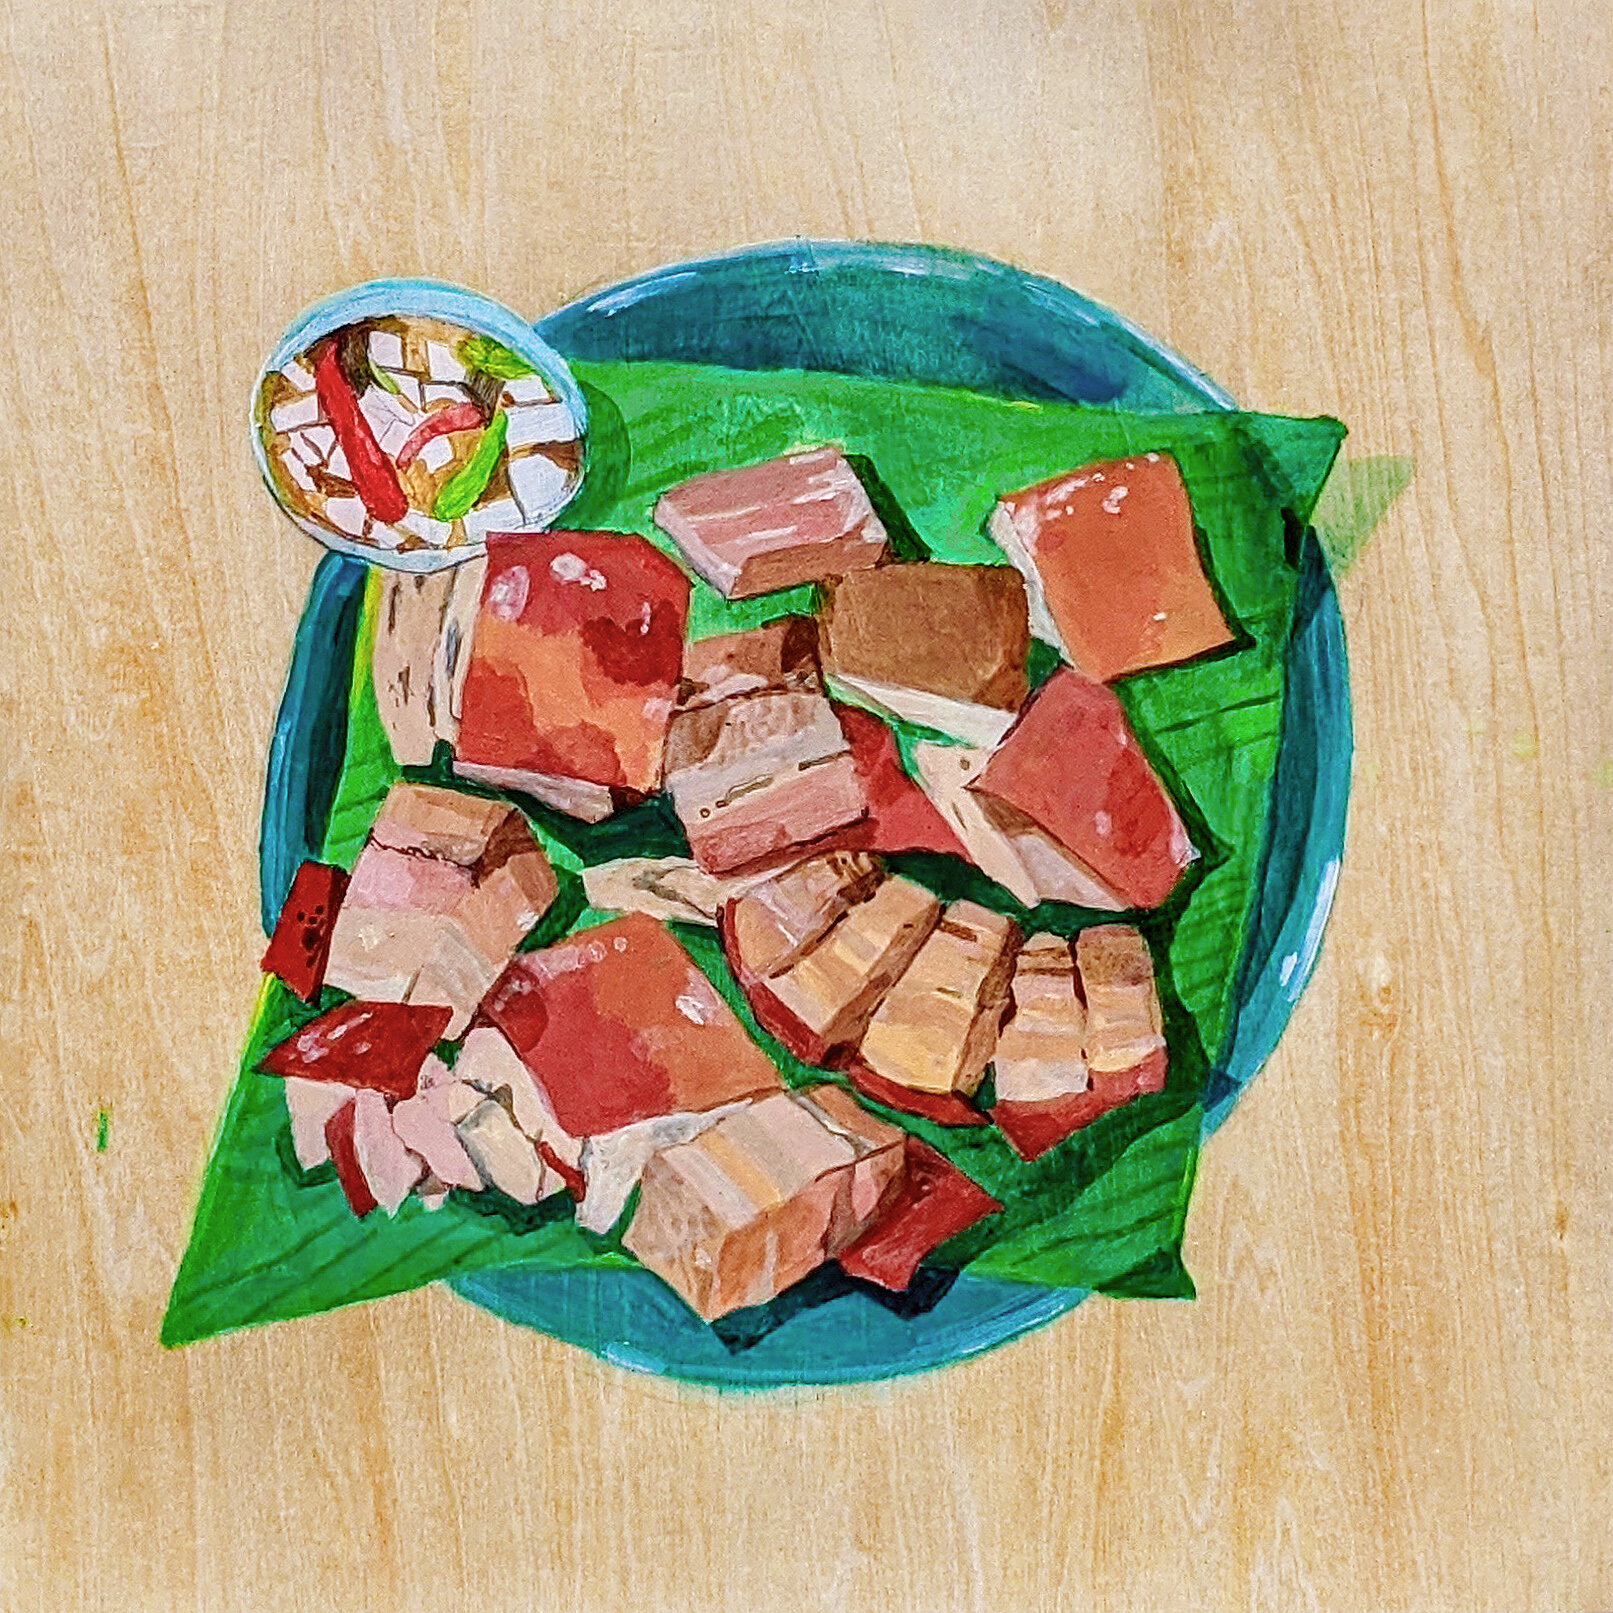  "Comfort Food" Series: Lechon on Banana Leaf | Acrylic on Wood | 8”x 8”